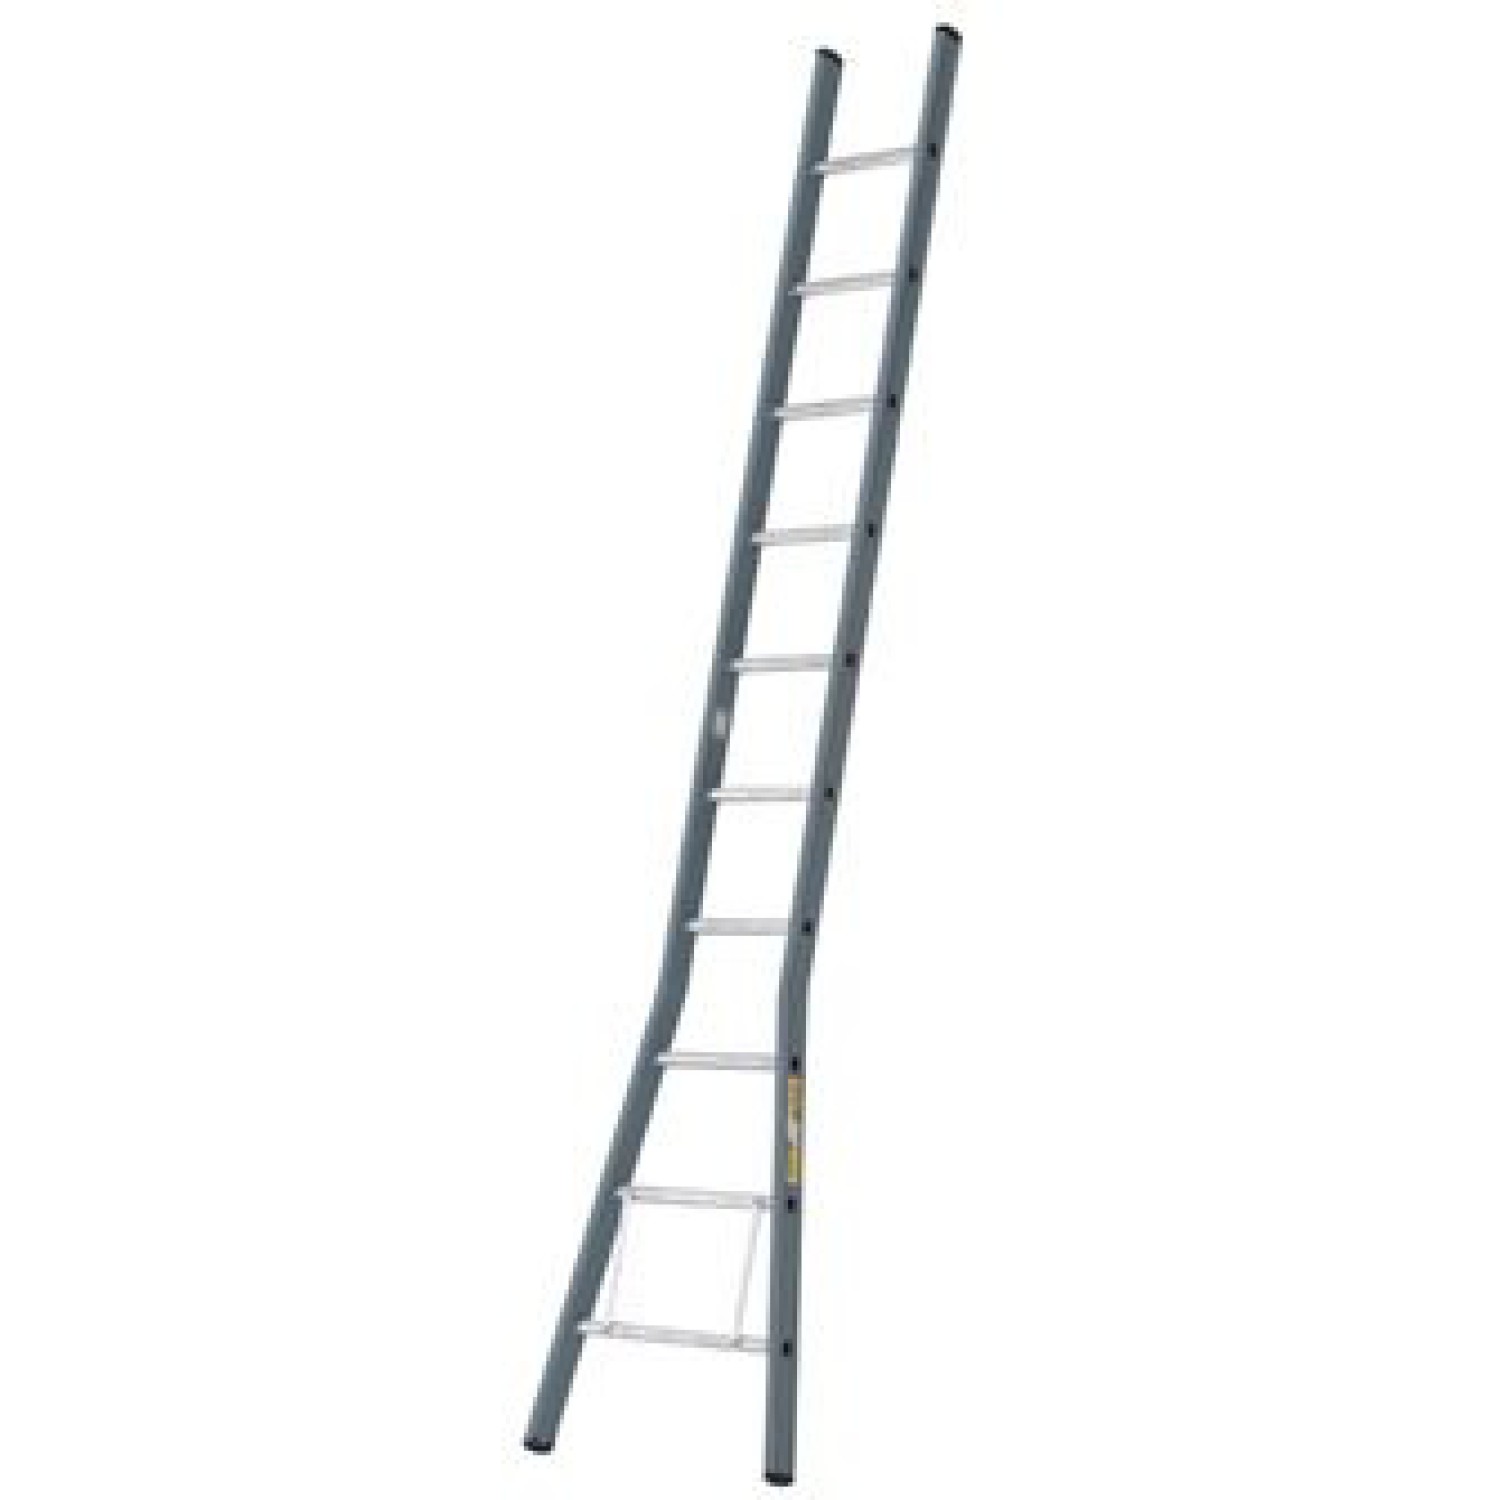 dirks enkele uitgebogen ladder 36 meter